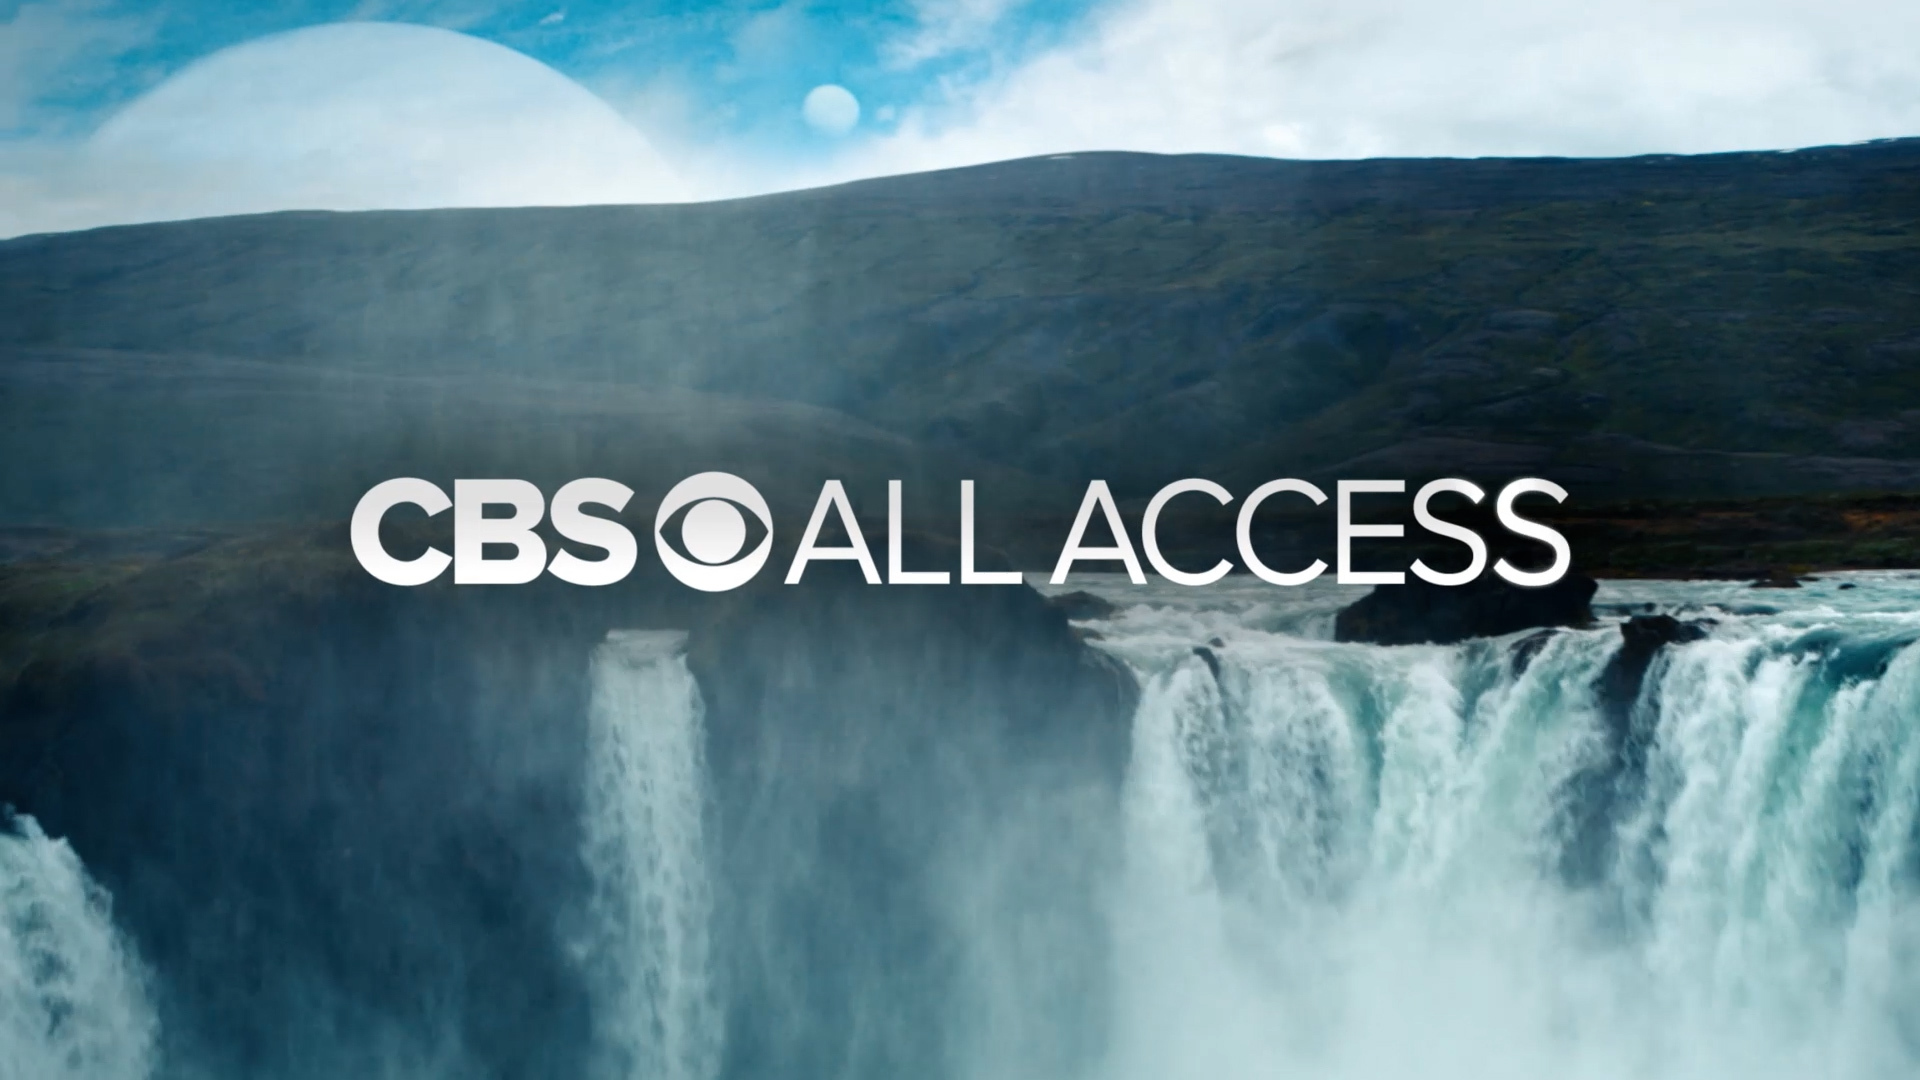 CBS all access. Access living